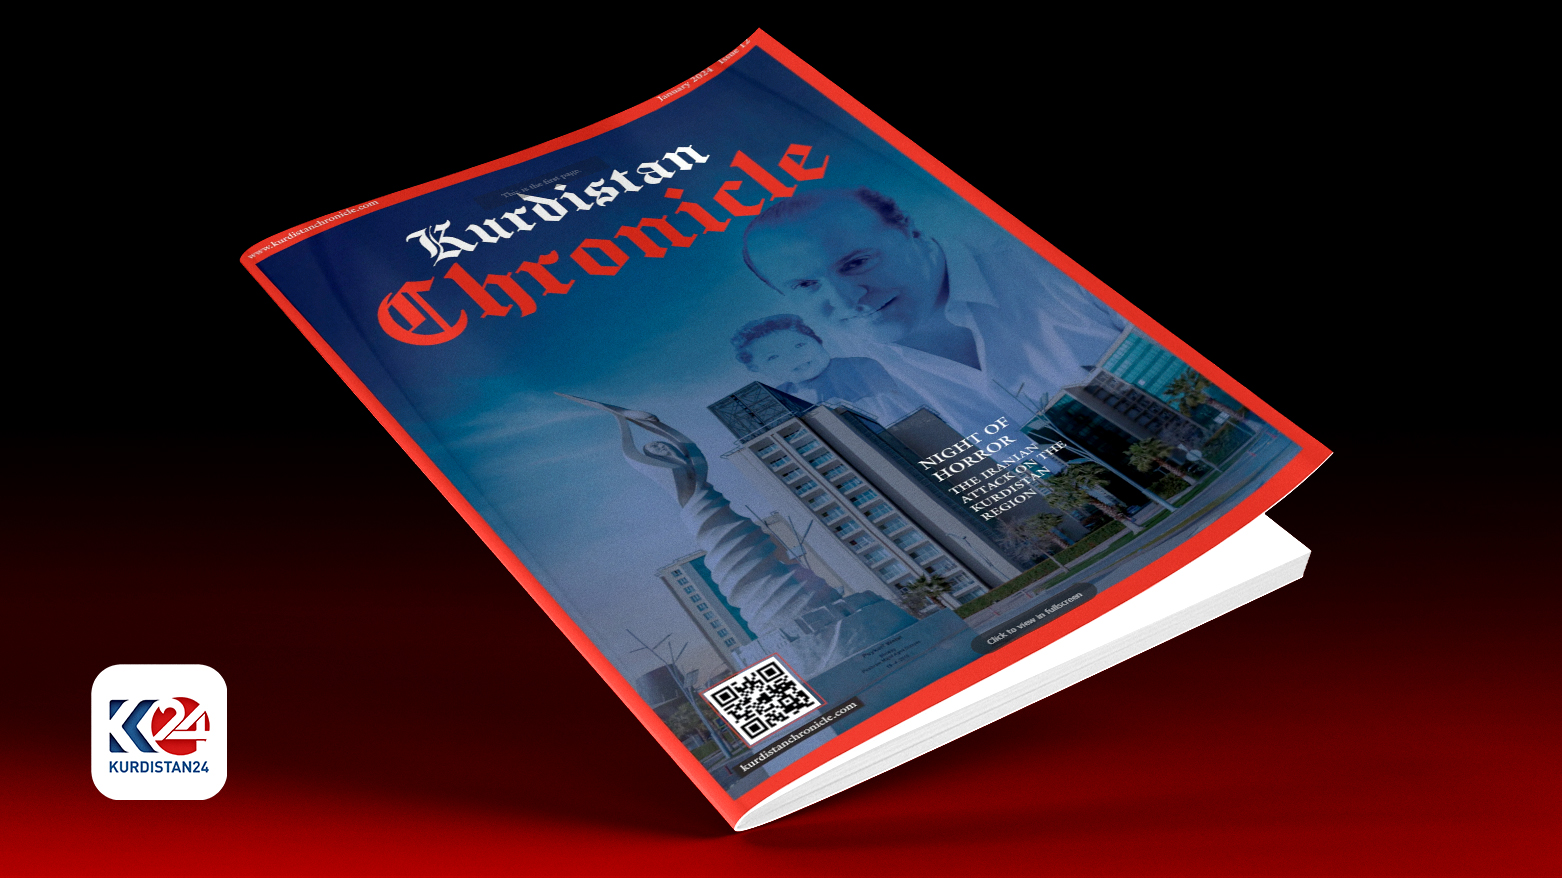 The latest issue of Kurdistan Chronicle magazine cover. (Photo: Kurdistan Chronicle)